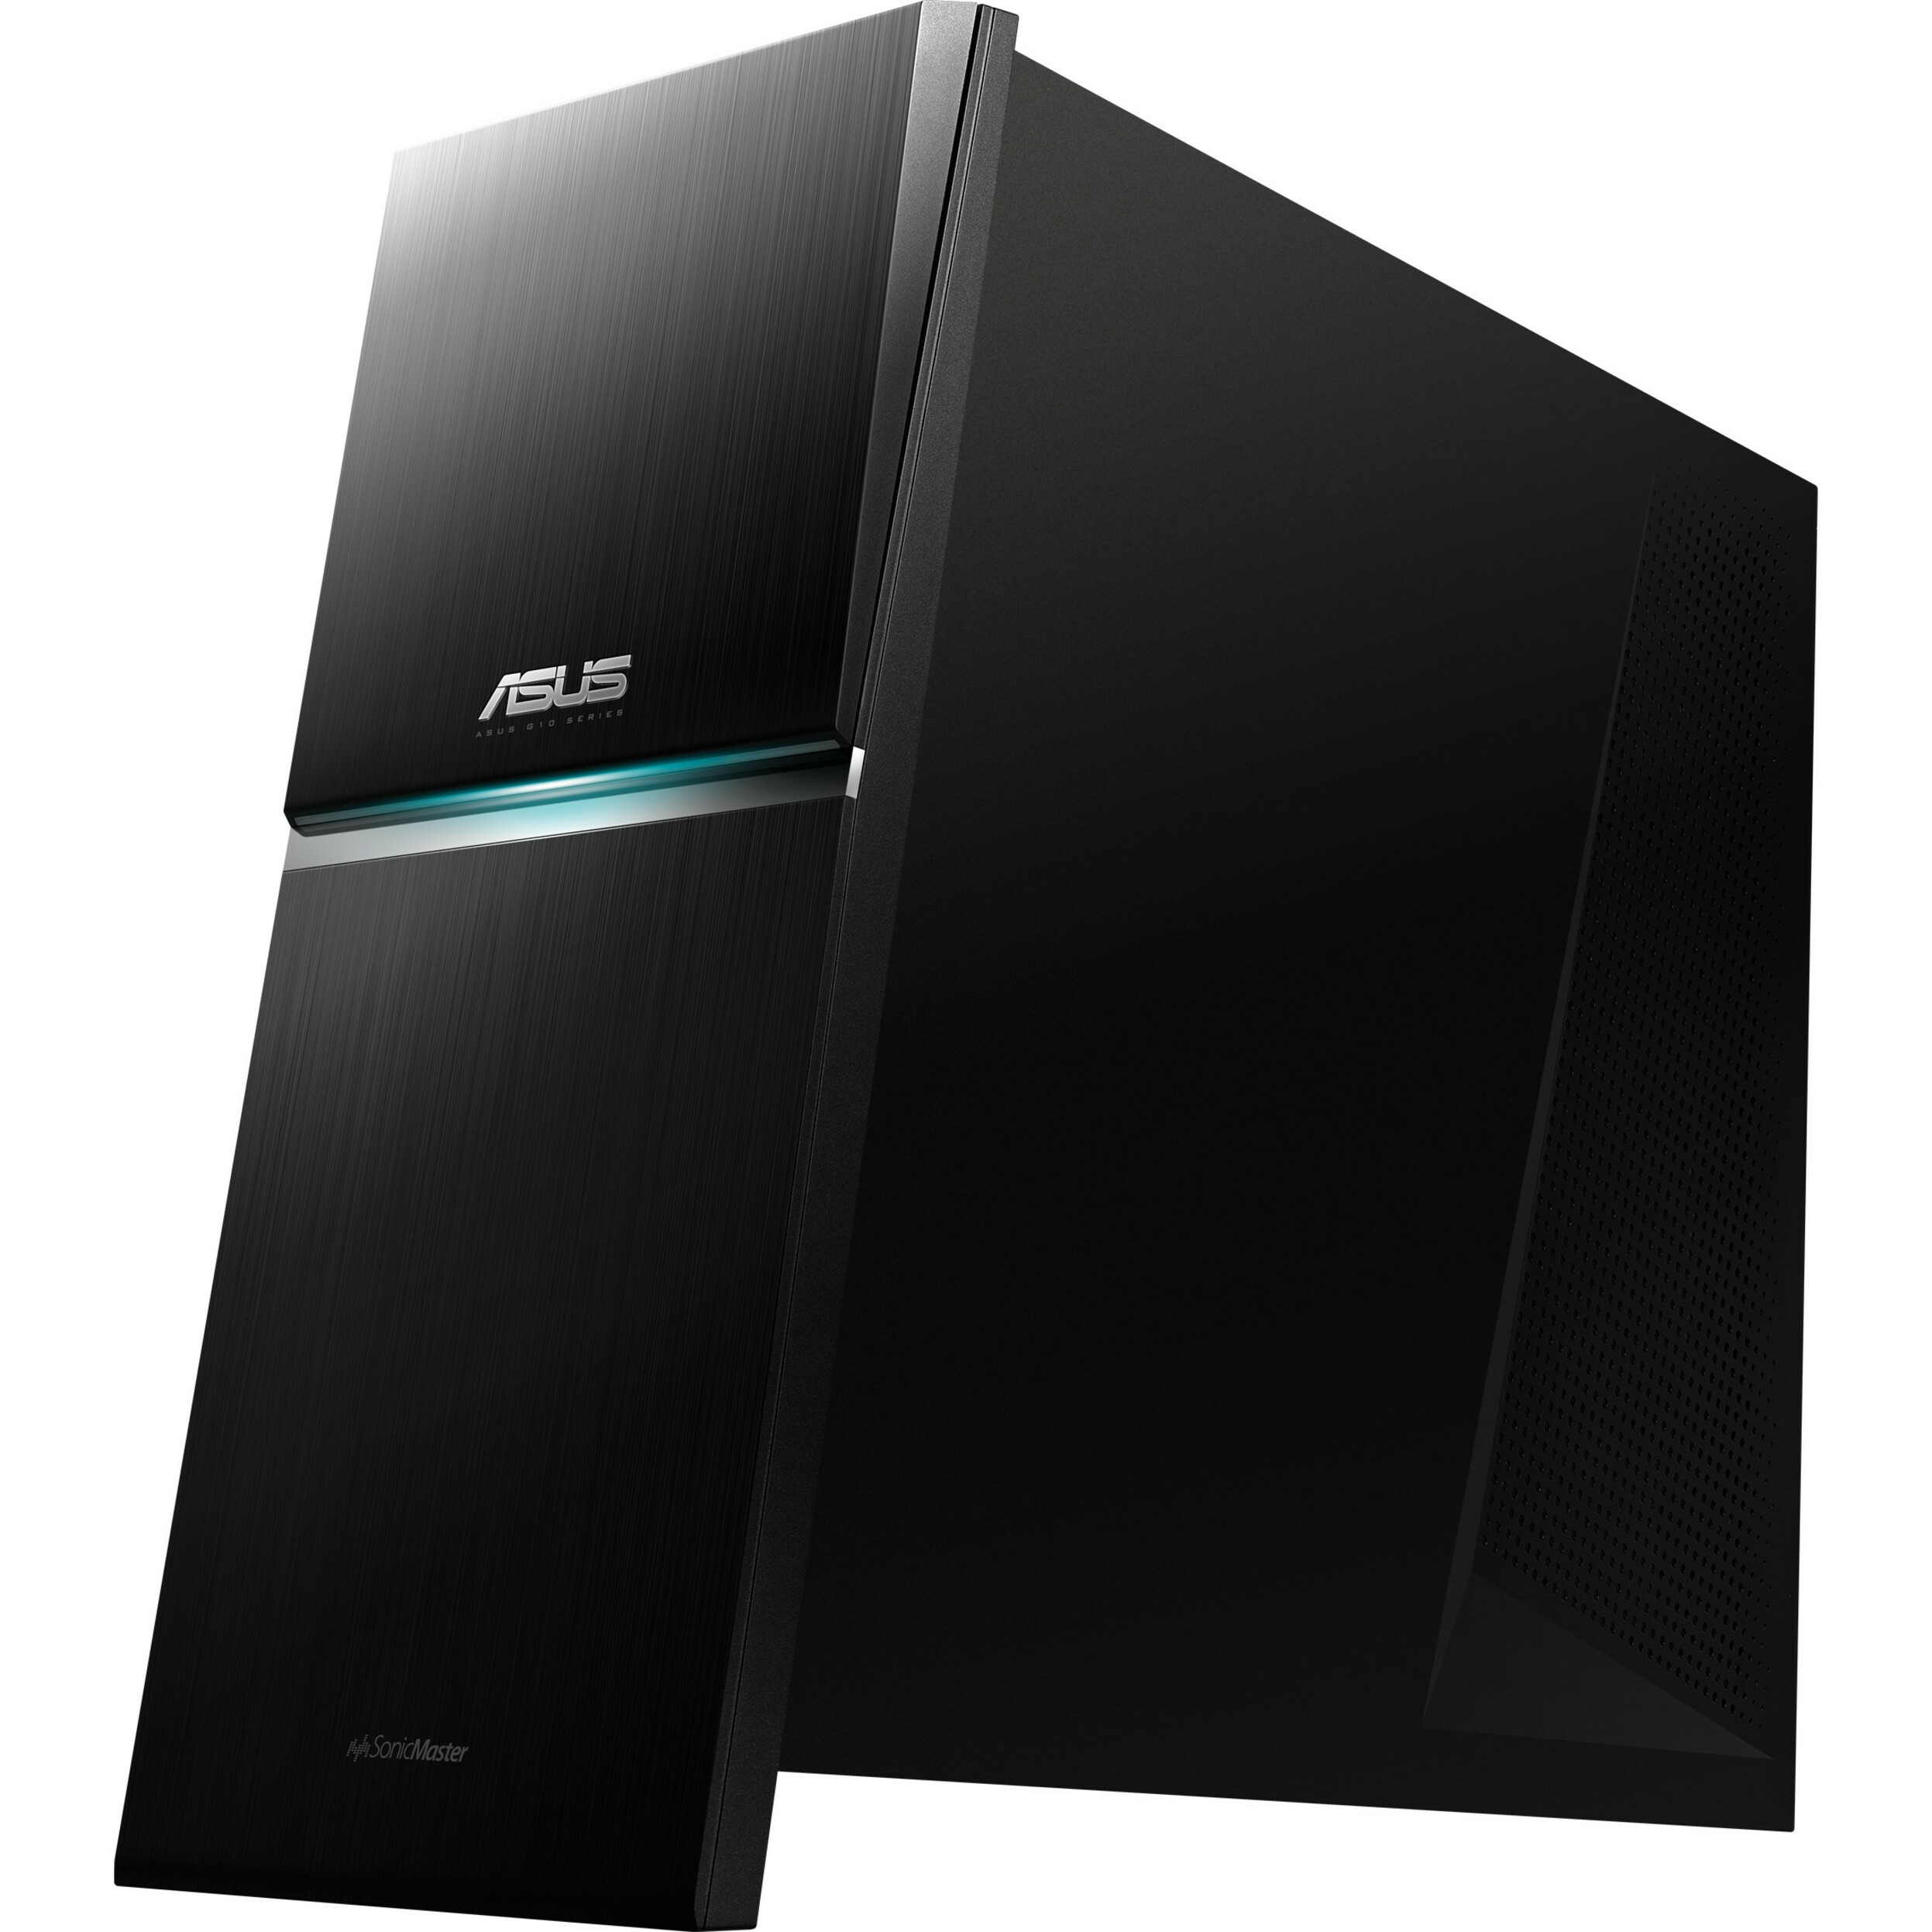 Asus ROG Gaming Desktop, Intel Core i7 i7-4770, 32GB RAM, 3TB HD, Blu-Ray/DVD Combo Drive, Windows 8, G10AC-US002S - image 2 of 6